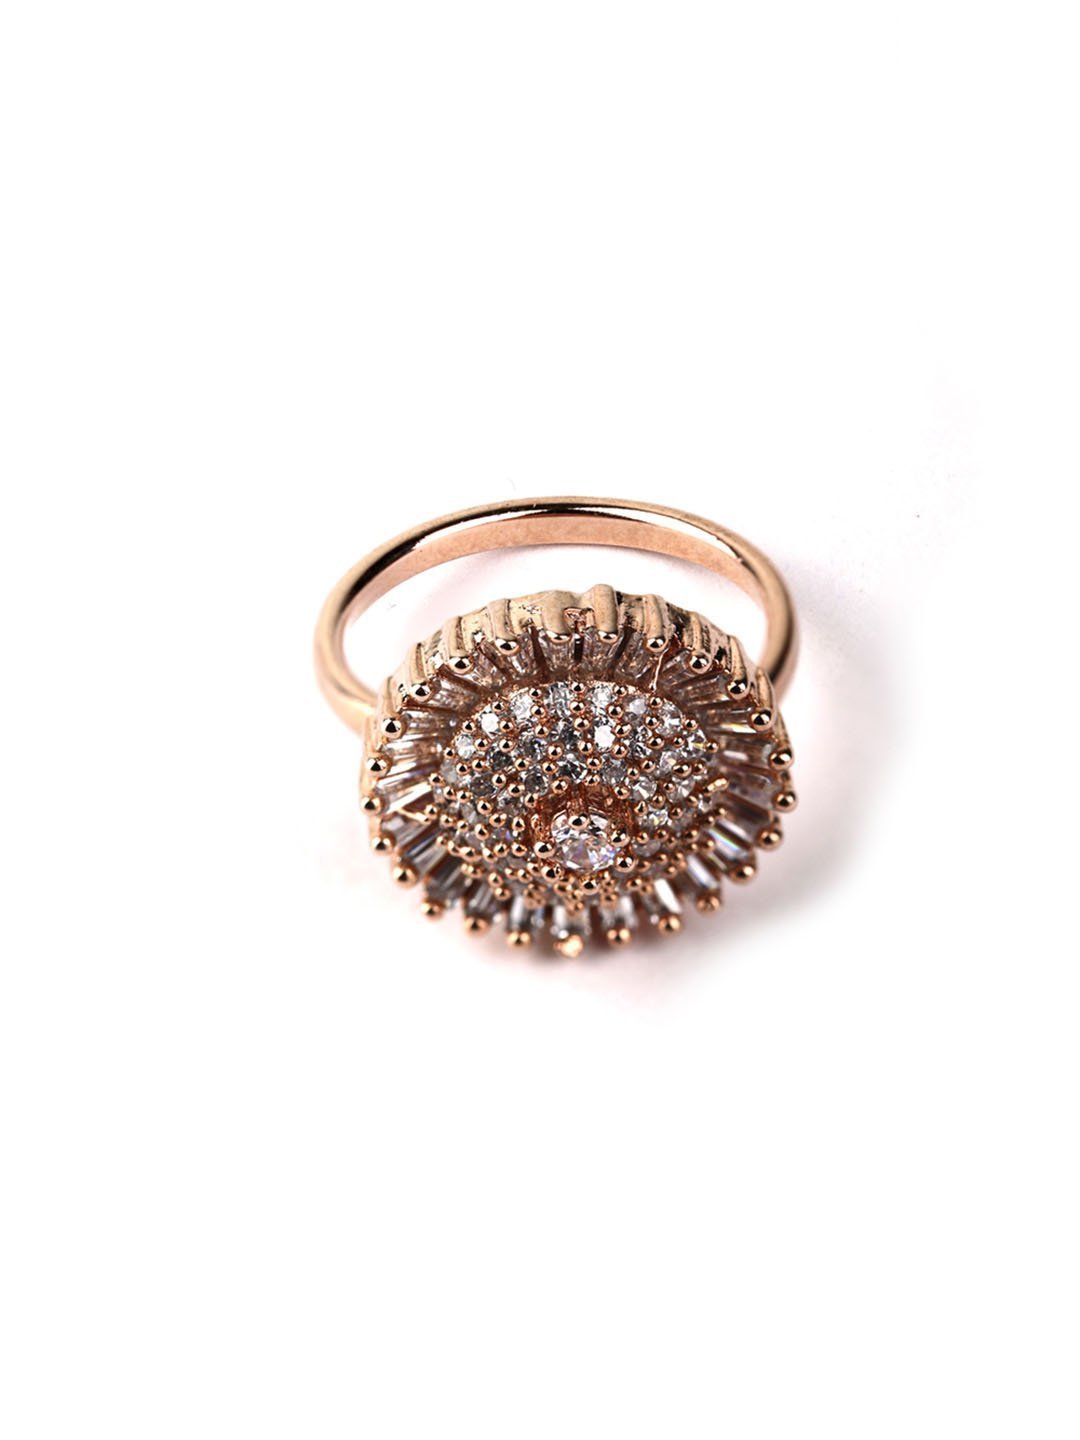 Women's American Diamond Jewellery Sets with Ring - Priyaasi